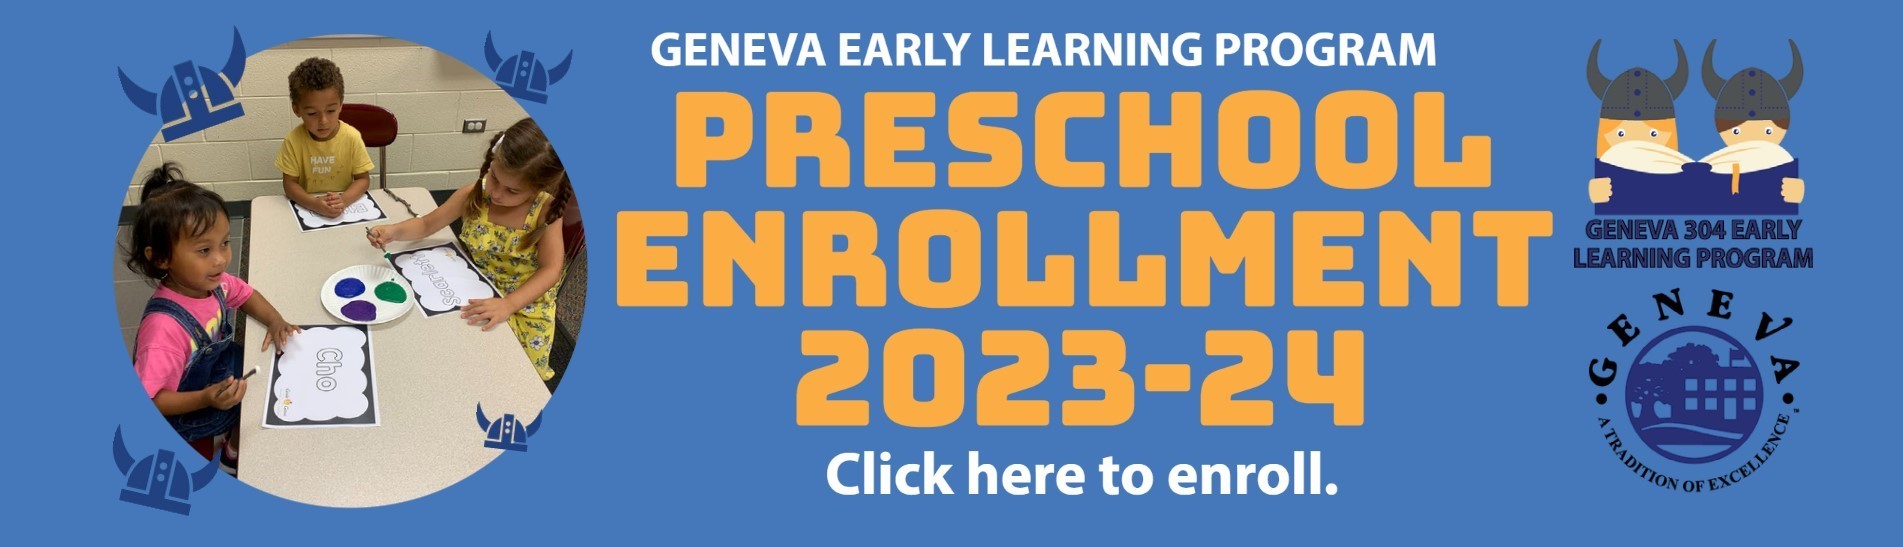 Preschool enrollment now open